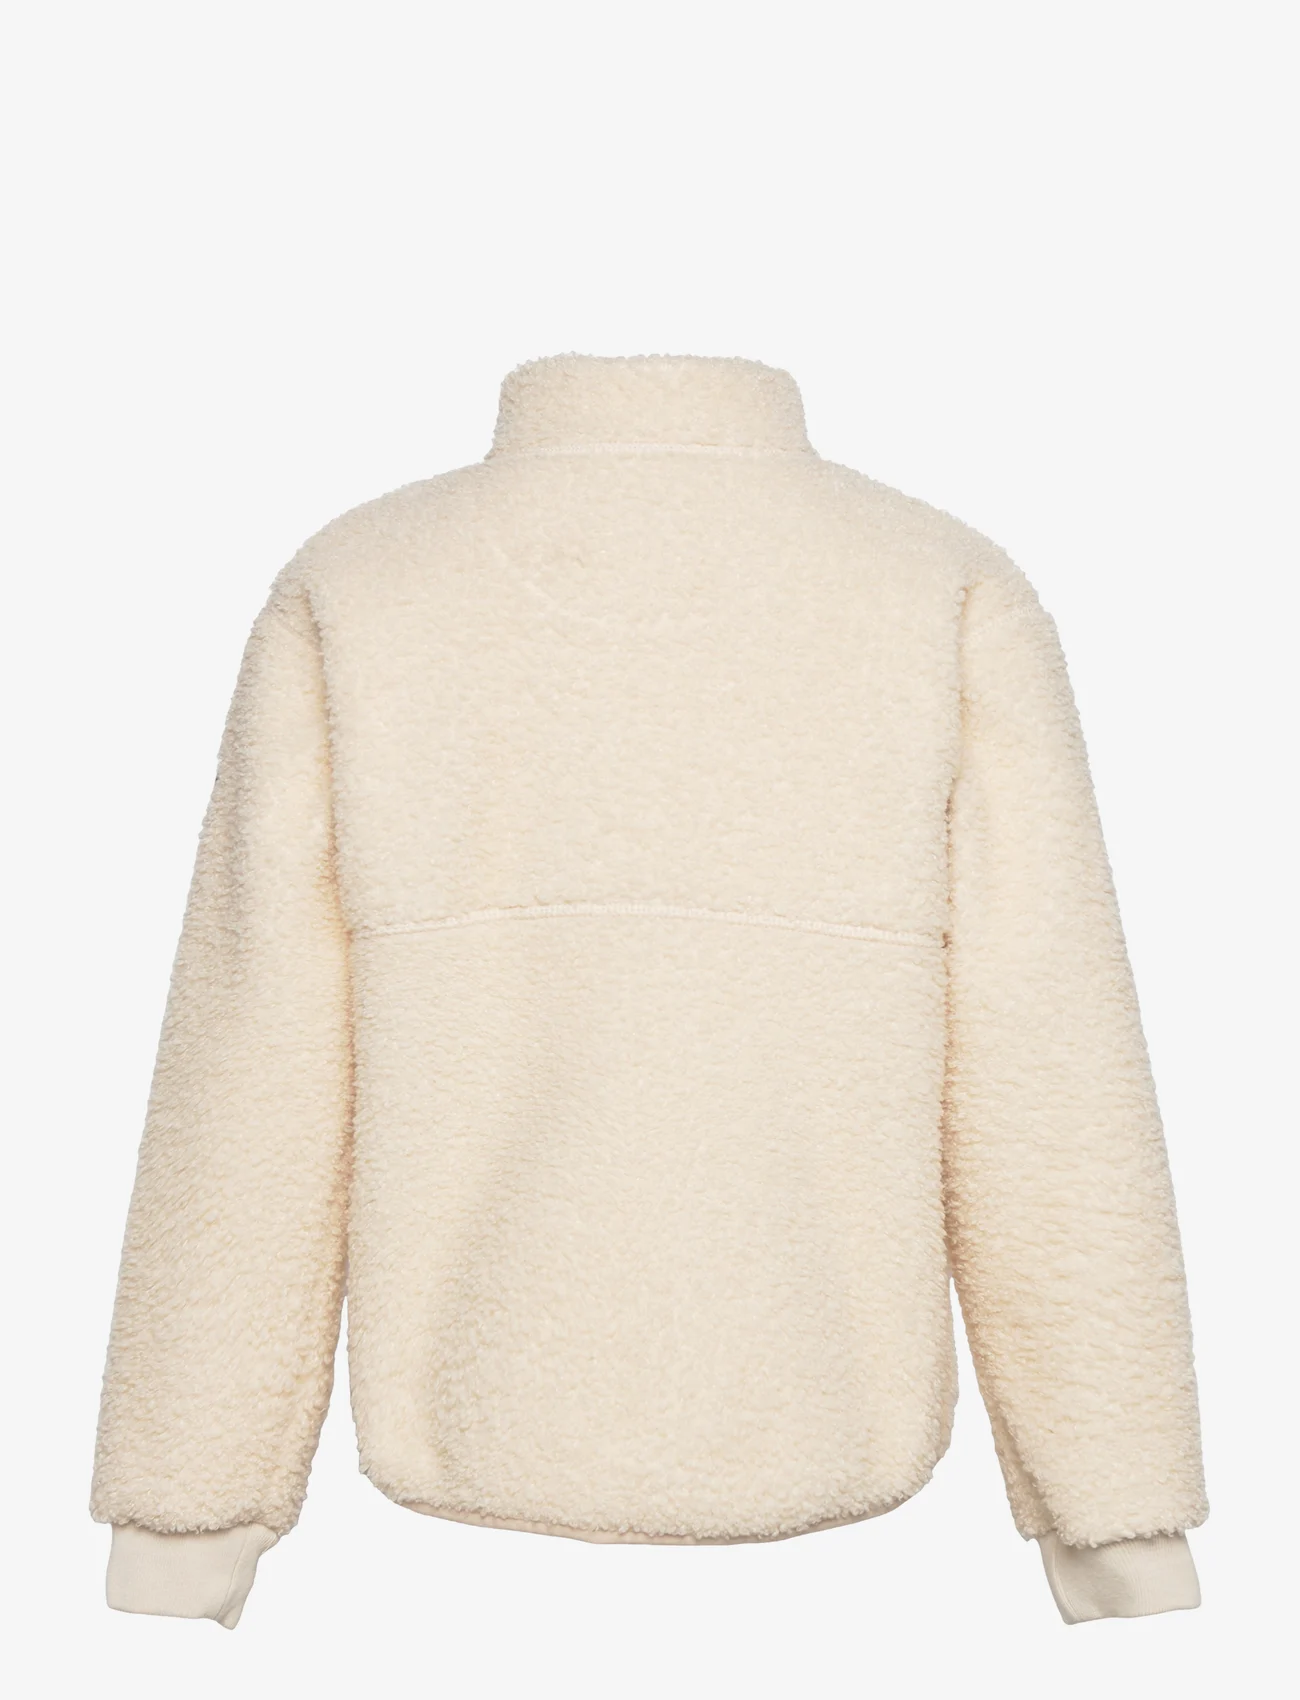 Mini A Ture - Saleh teddyfleece jacket. GRS - fleece jacket - sand dollar - 1